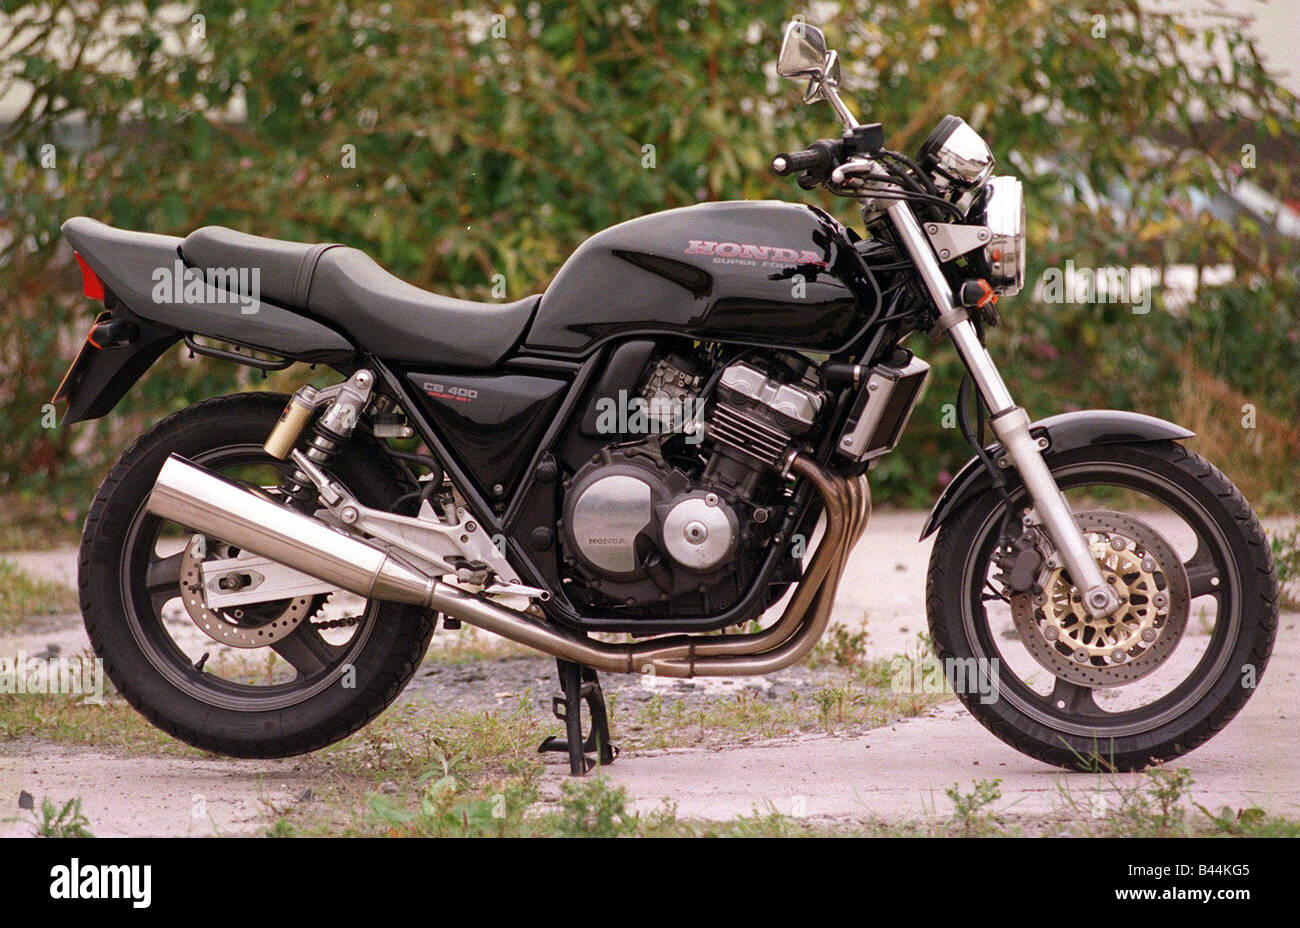 Honda CB 400cc 29A111432